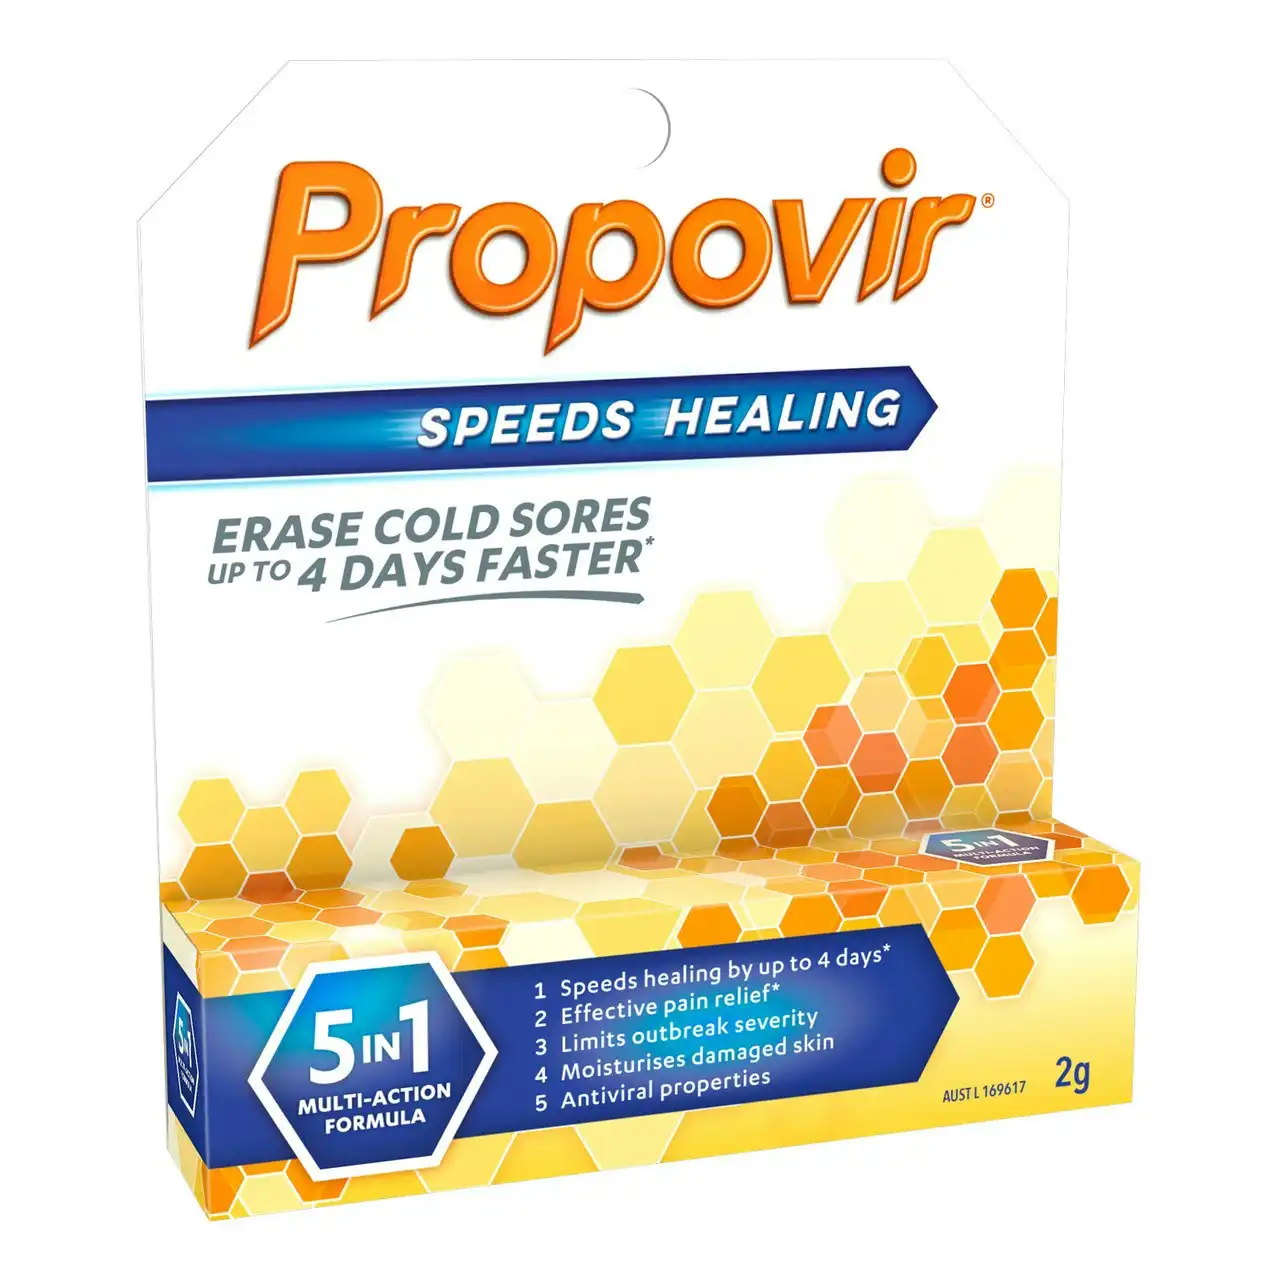 Propovir Speeds Healing 2g